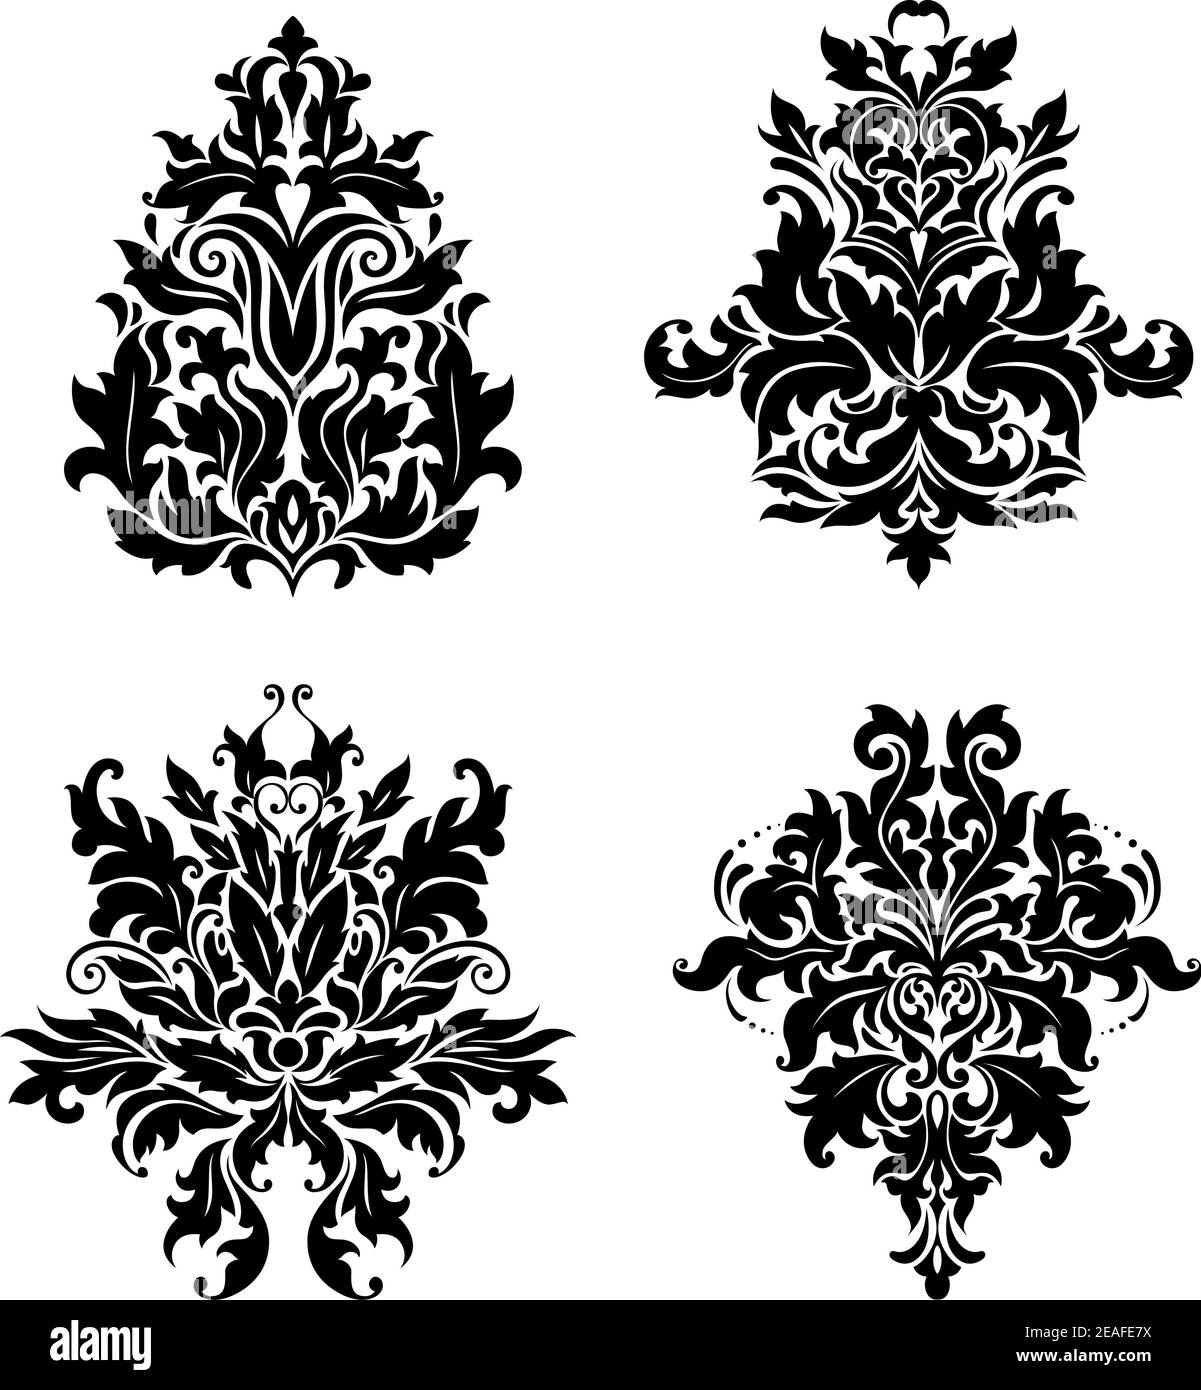 Damask patterns in vintage floral style for design Stock Vector